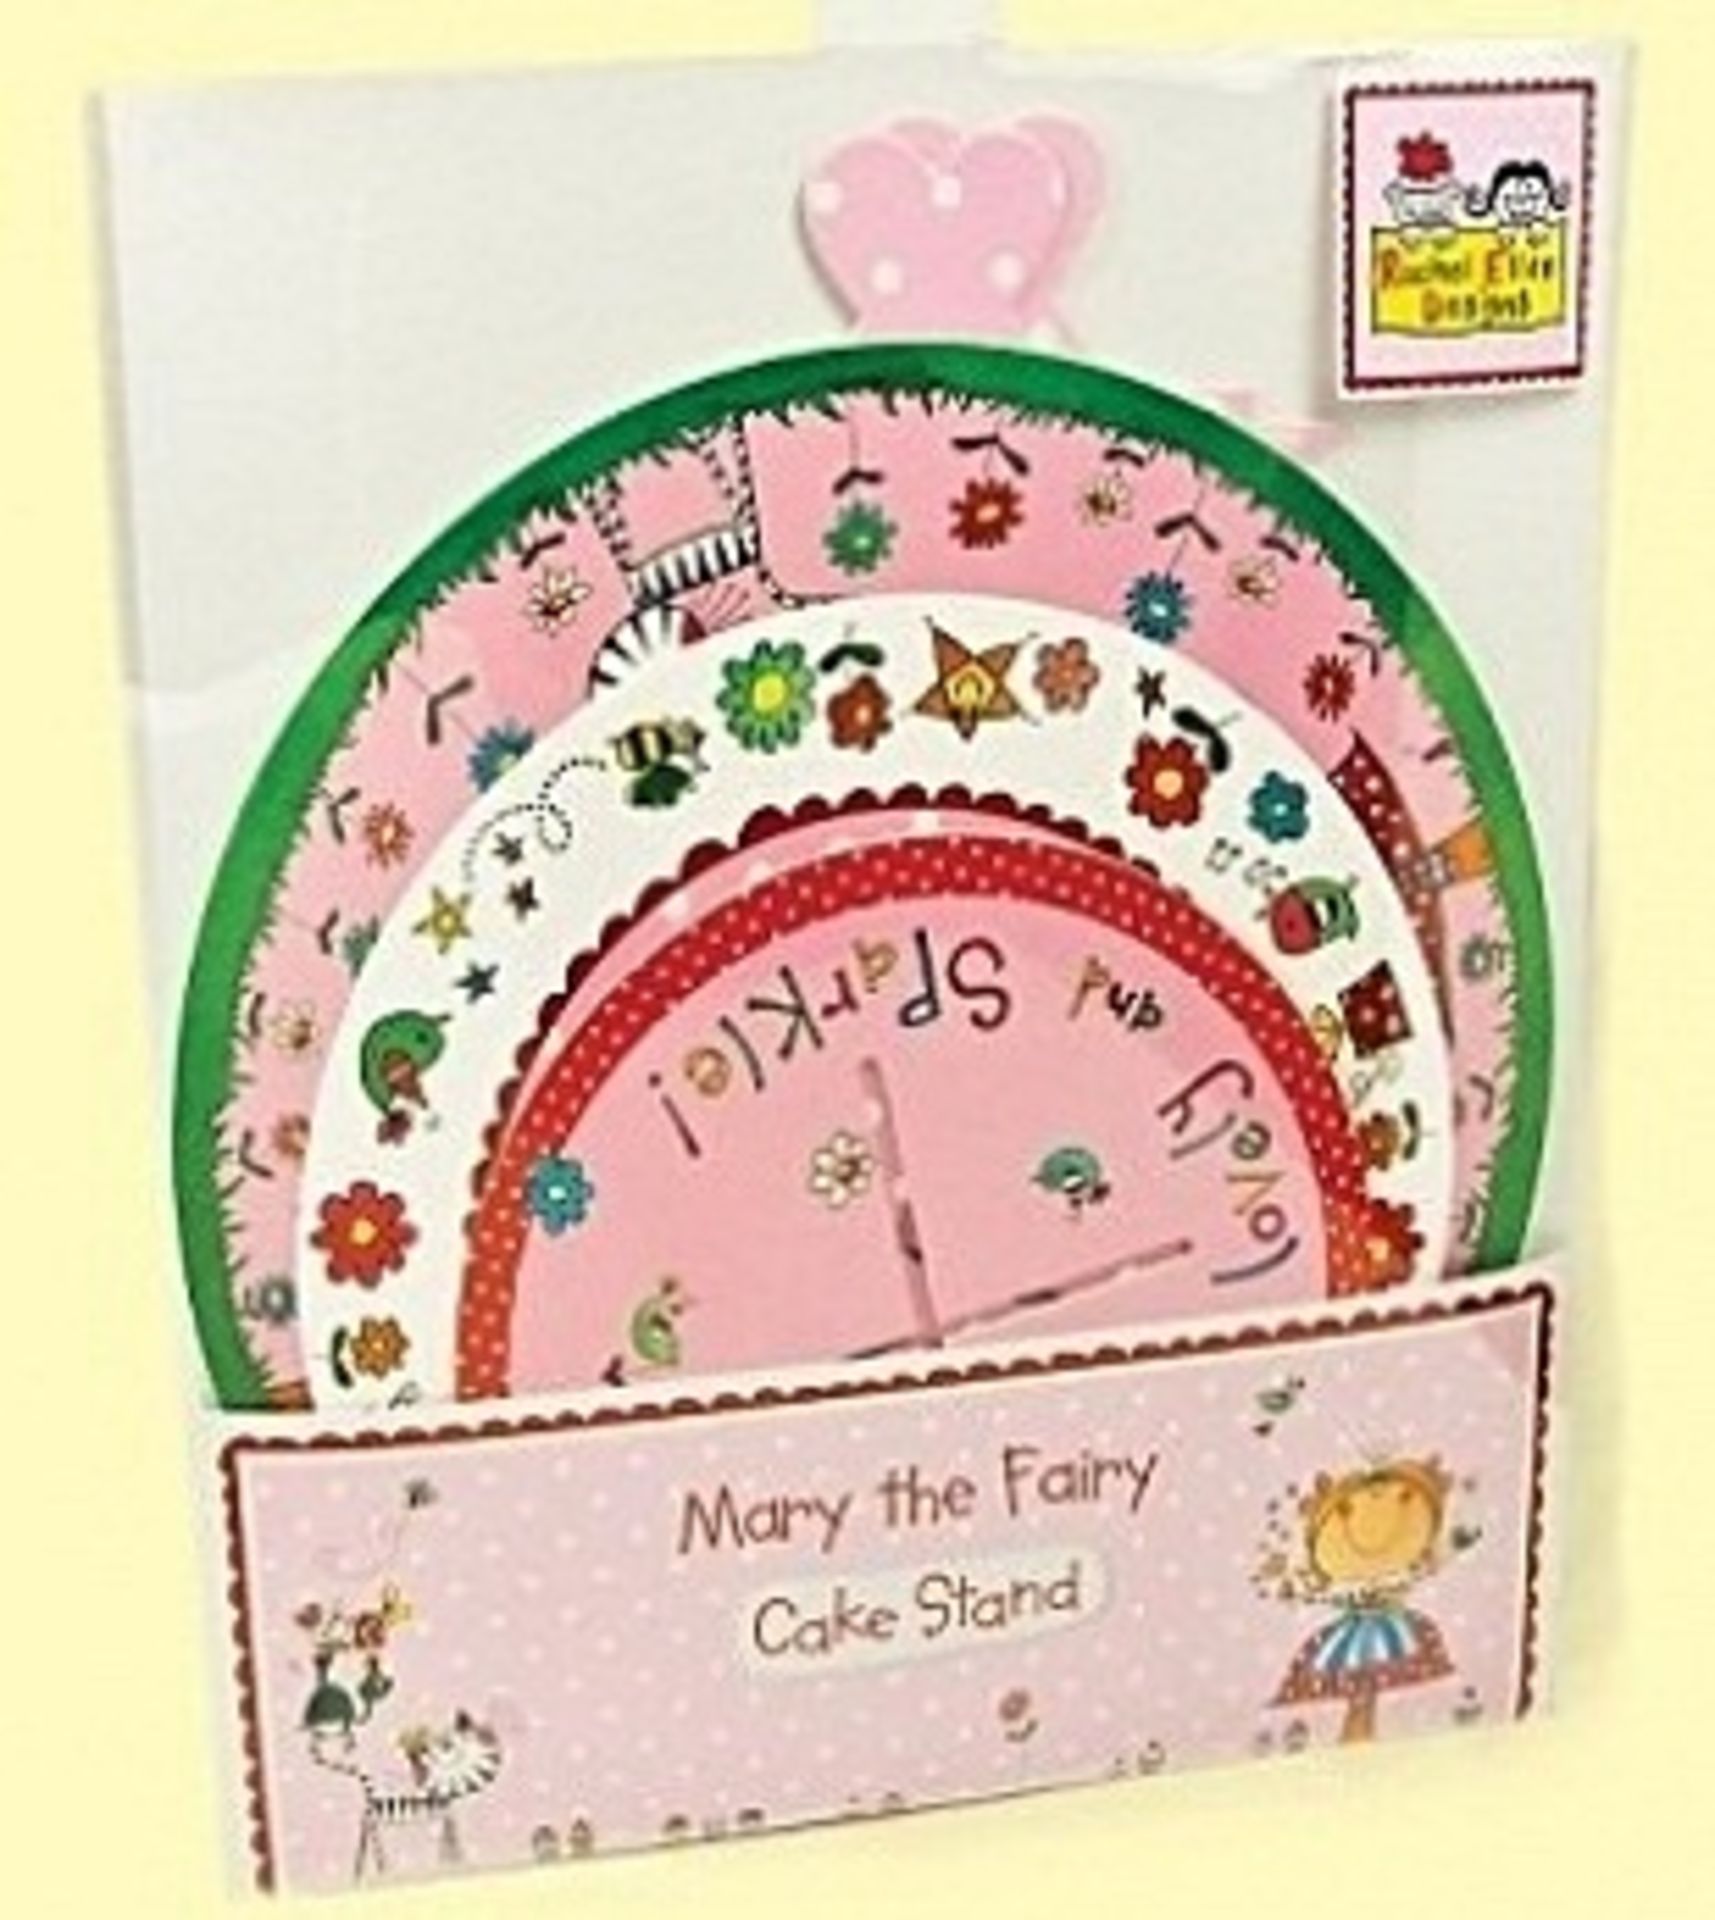 48 x Rachel Ellen Mary The Fairy 3 Tier Cardboard Cake Stands - New / Unused Stock - Stand - Image 2 of 3